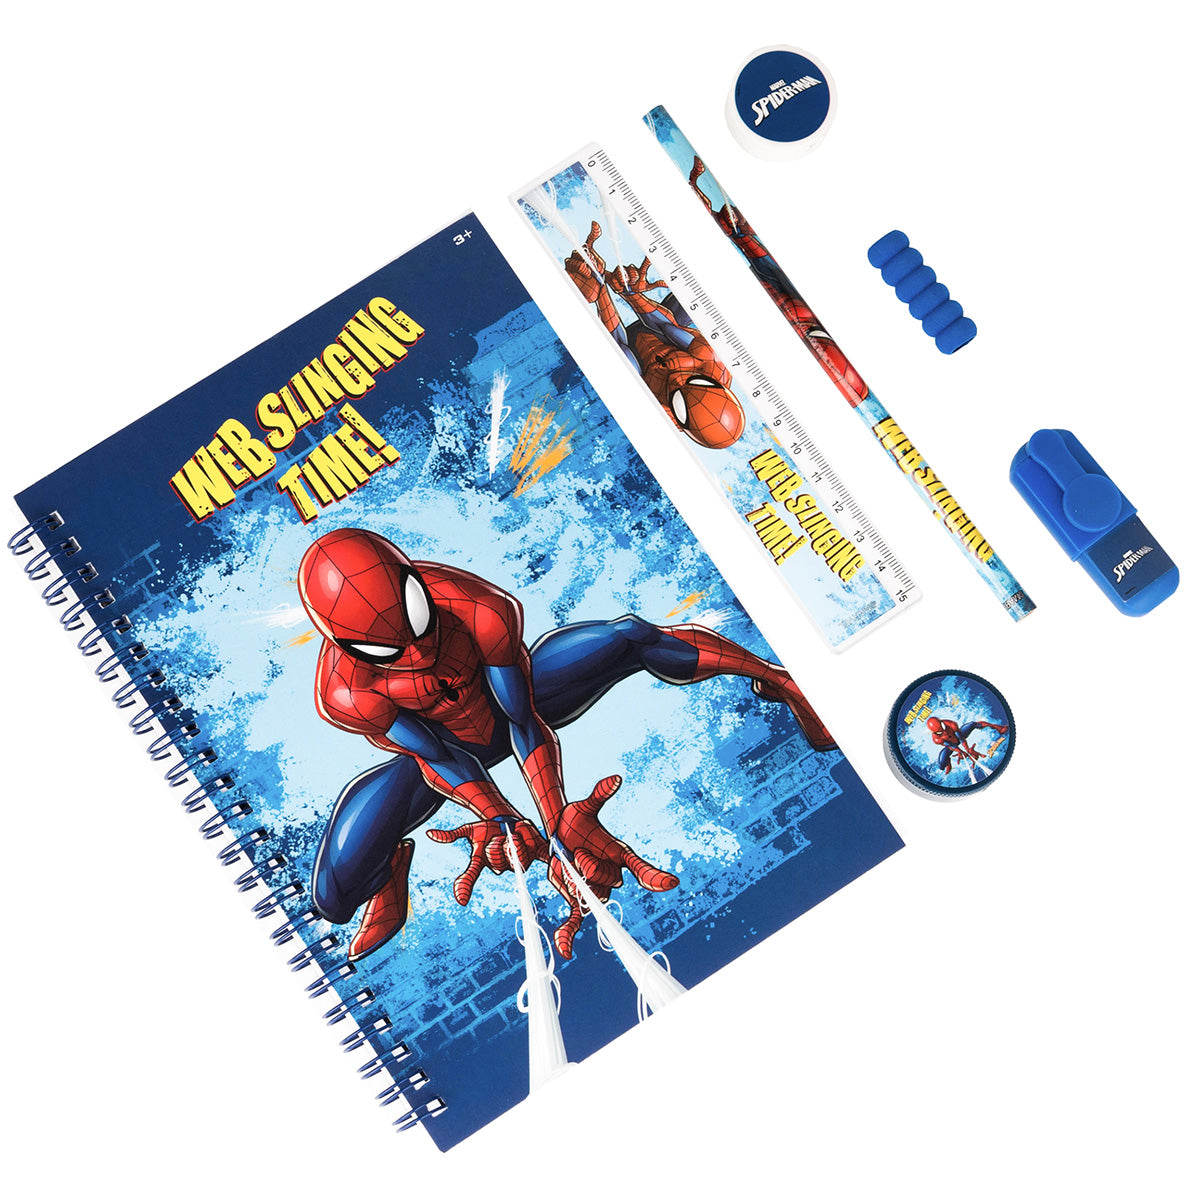 Marvel Spiderman Web Sling Action 6in1 Box Set 18"